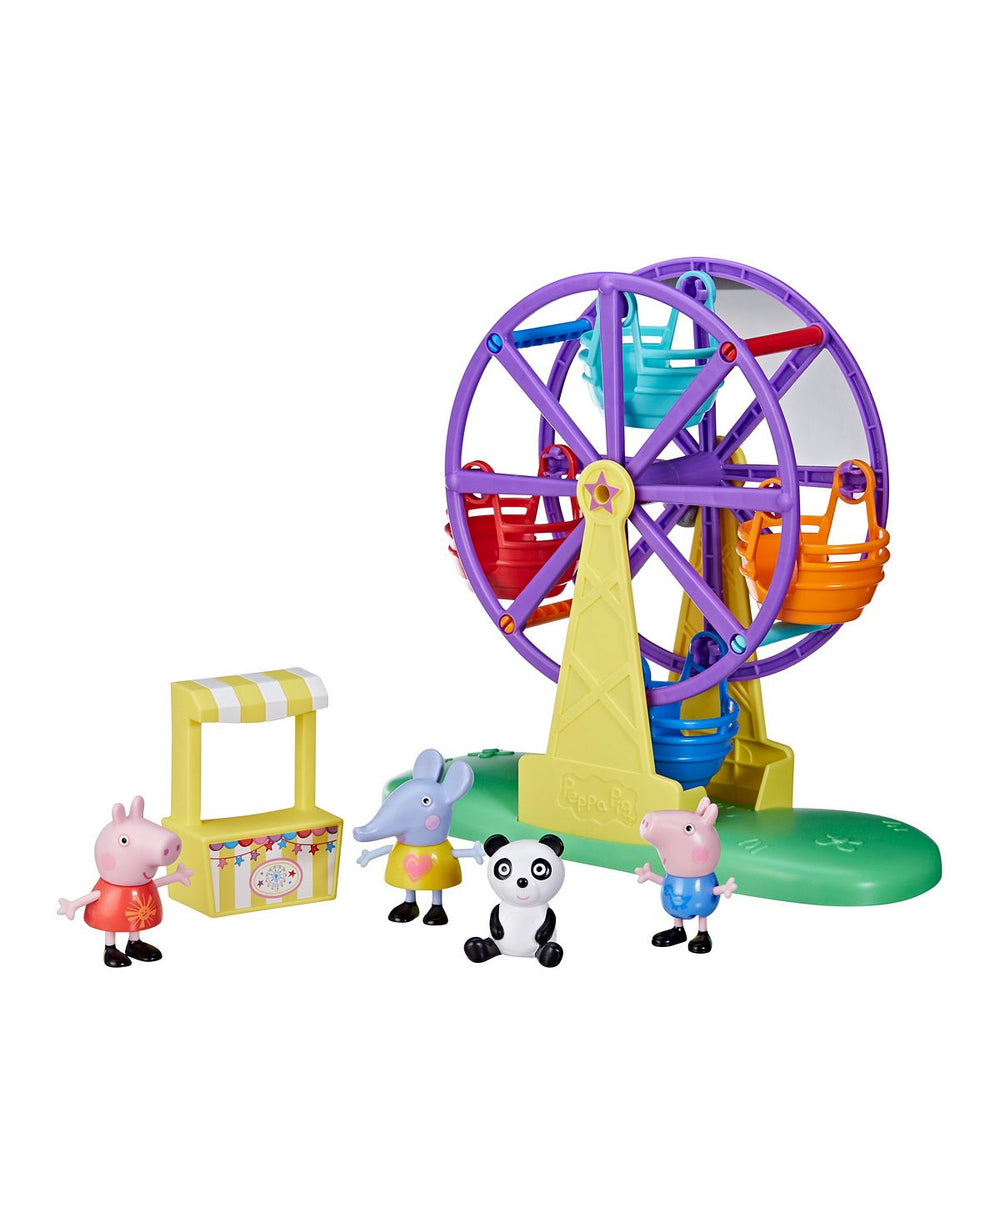 Peppa Pig Peppa's Fun Fair Playset with Spinning Ferris Wheel